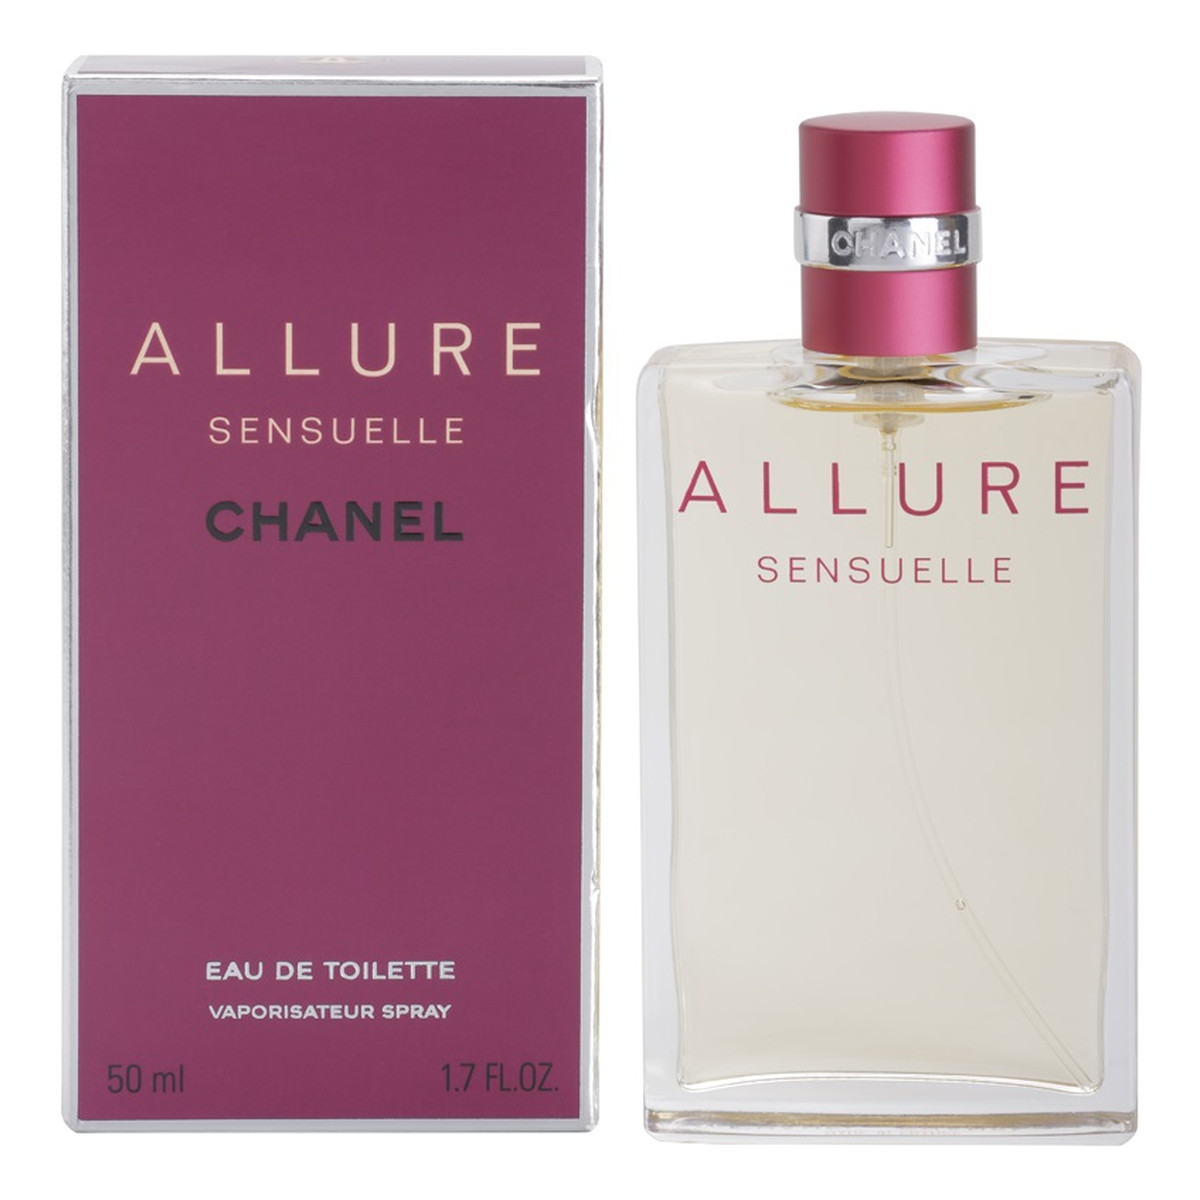 Chanel Allure Sensuelle woda toaletowa dla kobiet 50ml